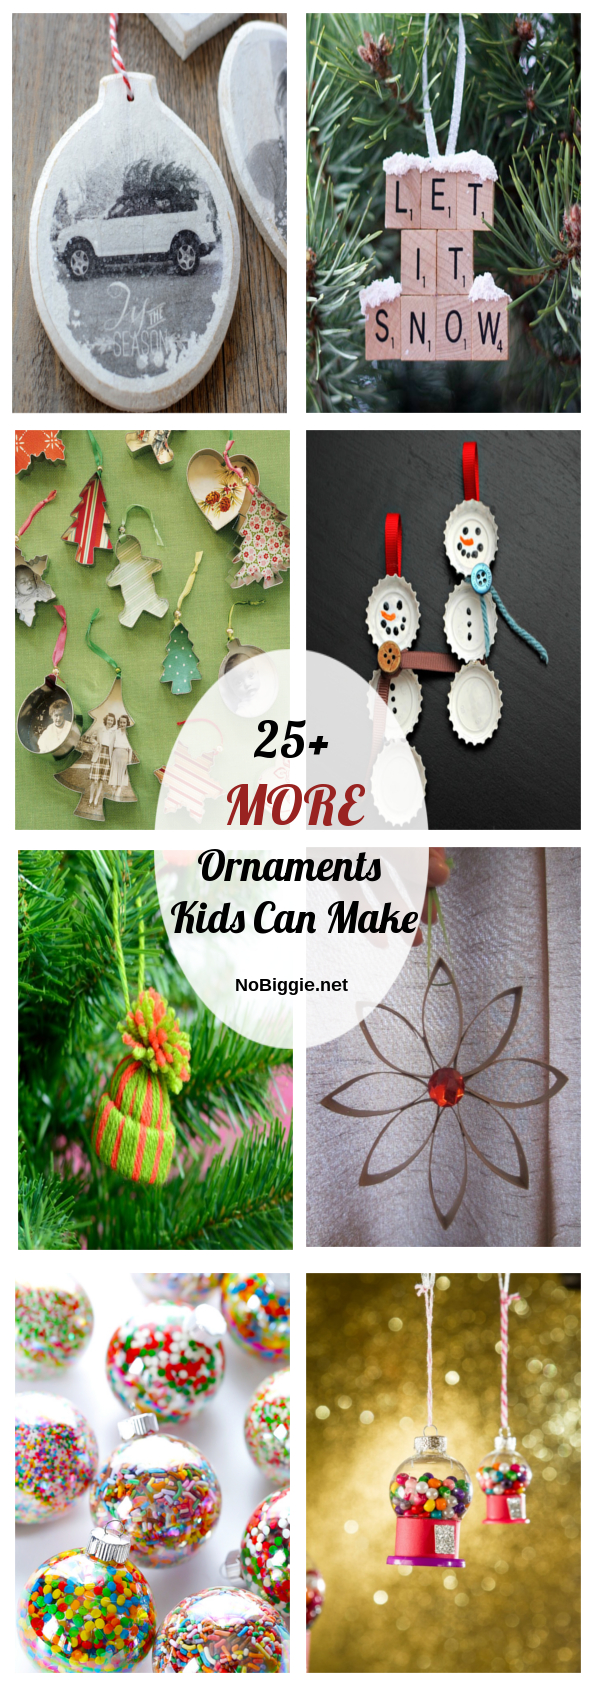 25+ MORE Ornaments Kids Can Make | NoBiggie.net